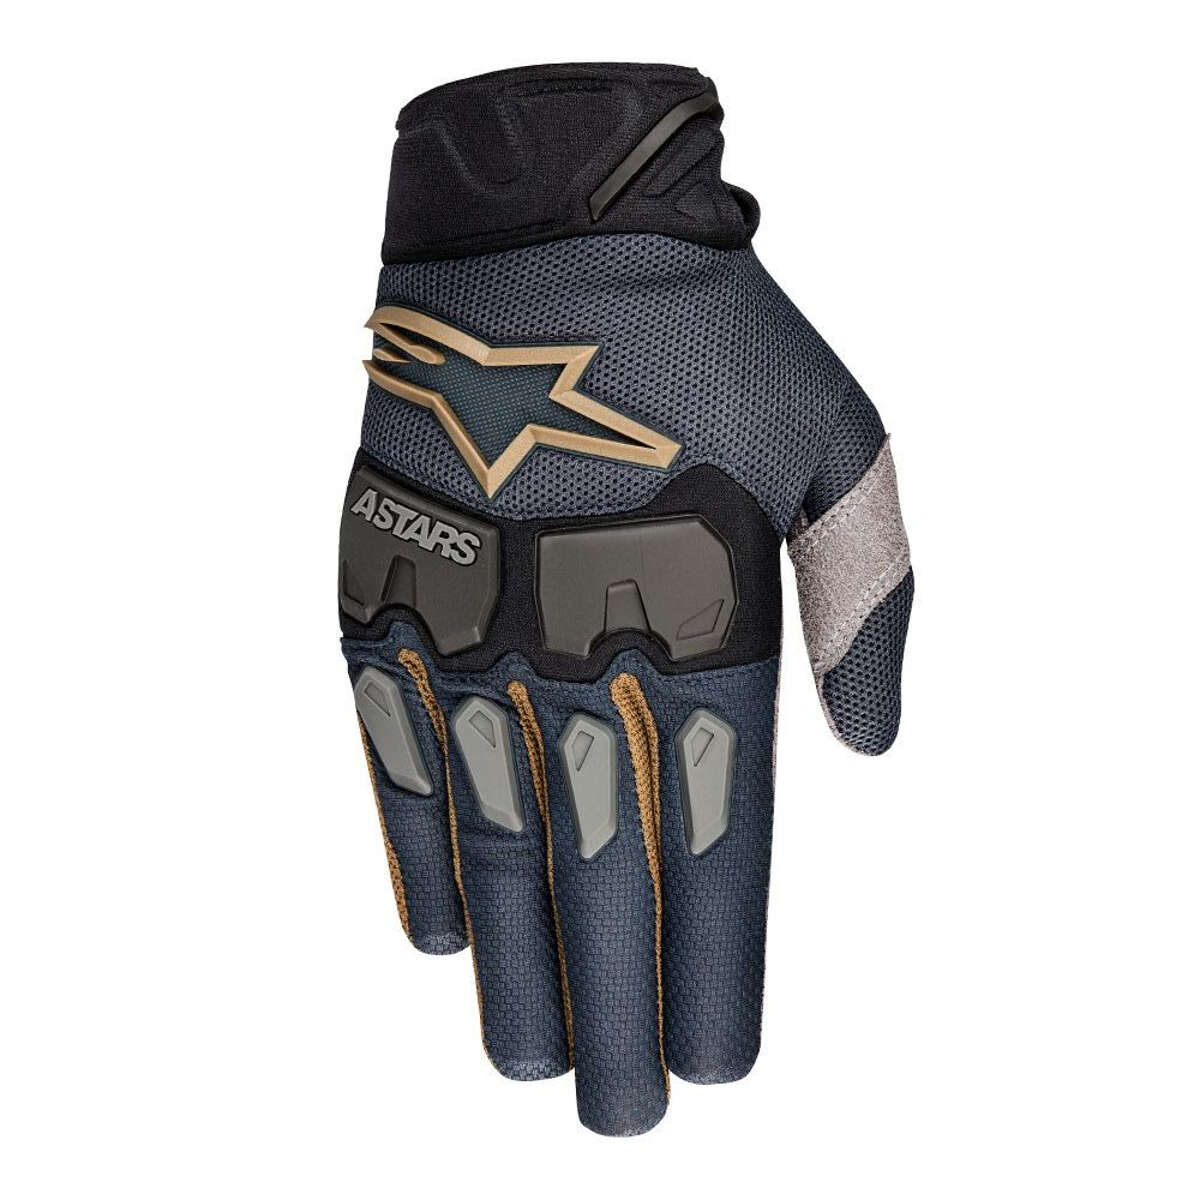 Alpinestars Gloves Racefend Limited Edition Aviator - Navy/Black/Gold